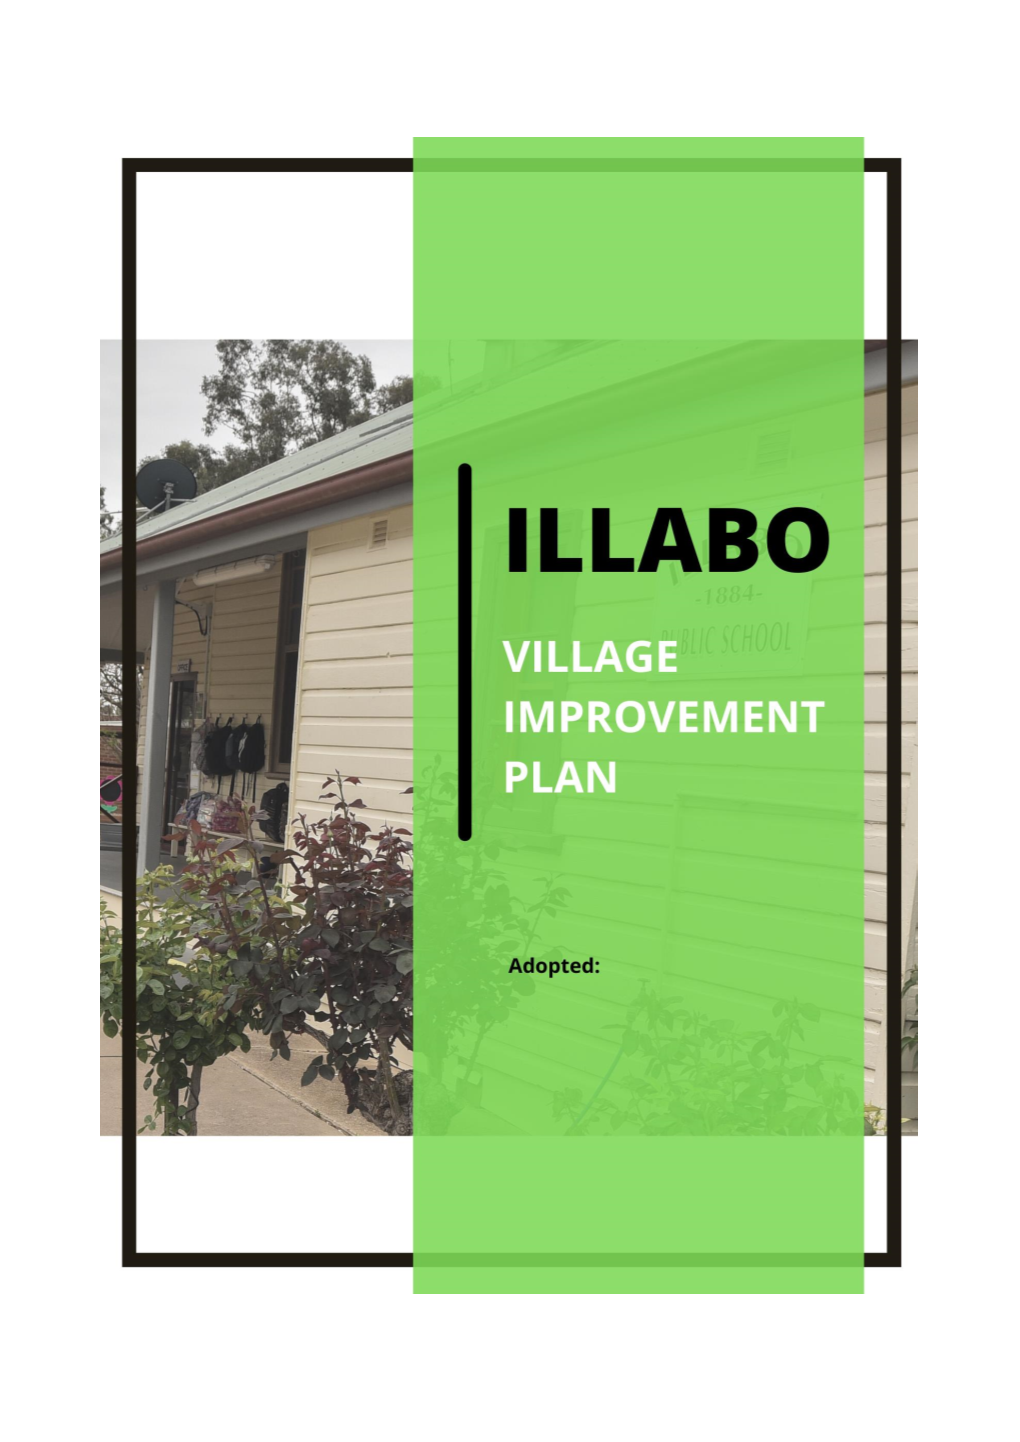 Introducing Illabo